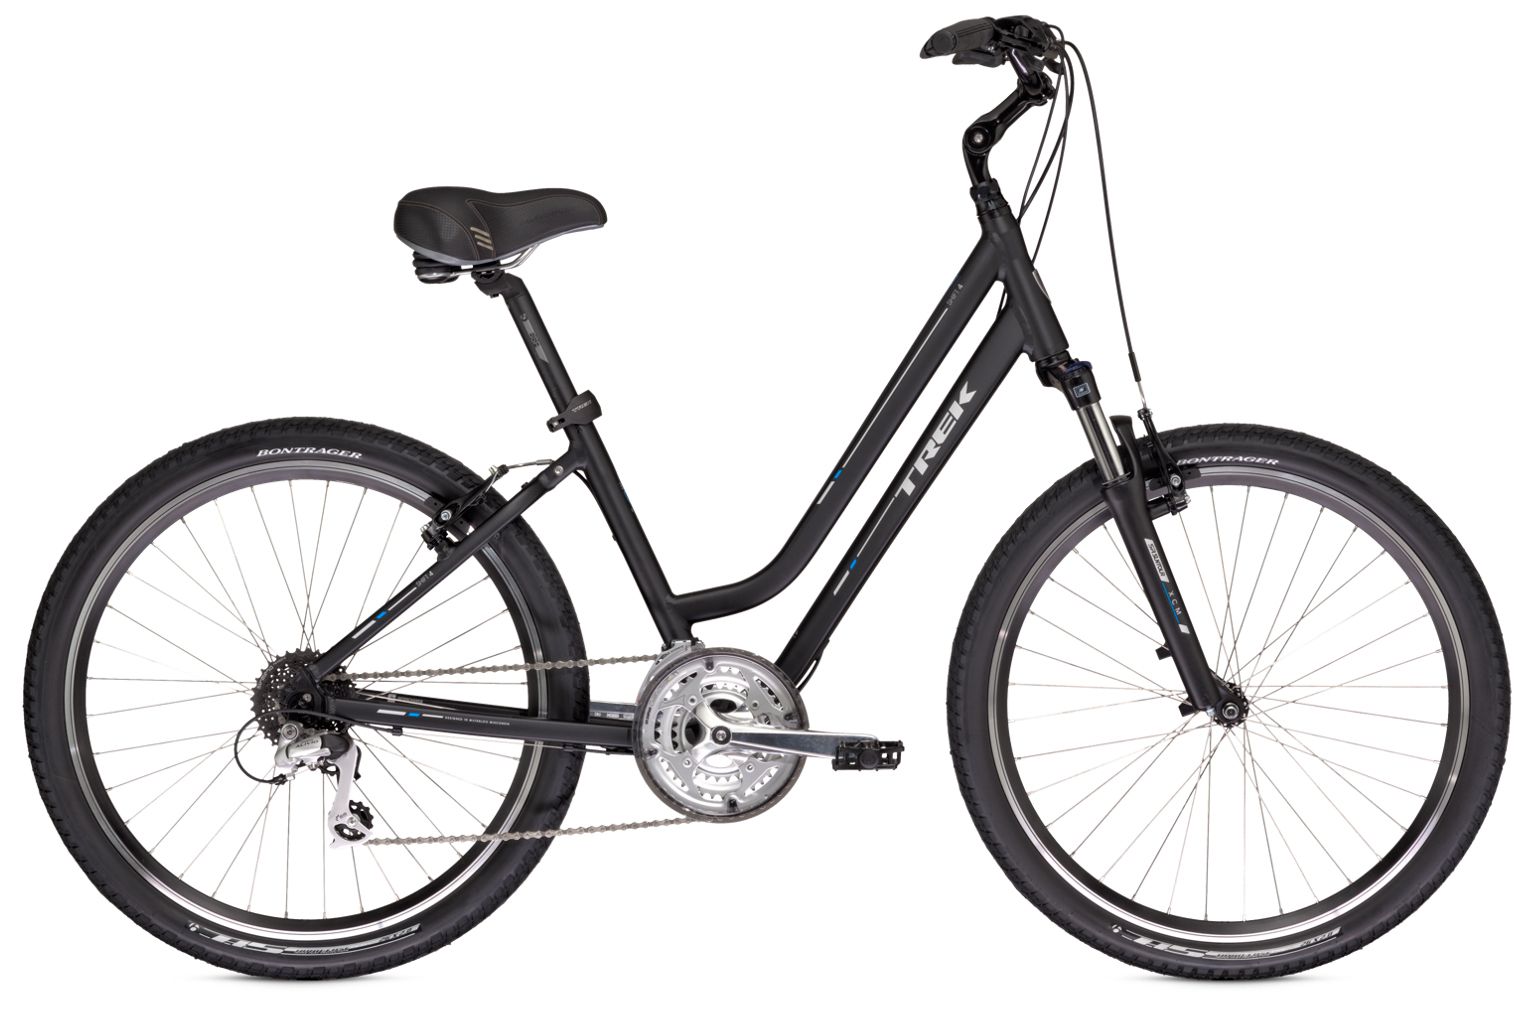  Велосипед Trek Shift 4 WSD 2014